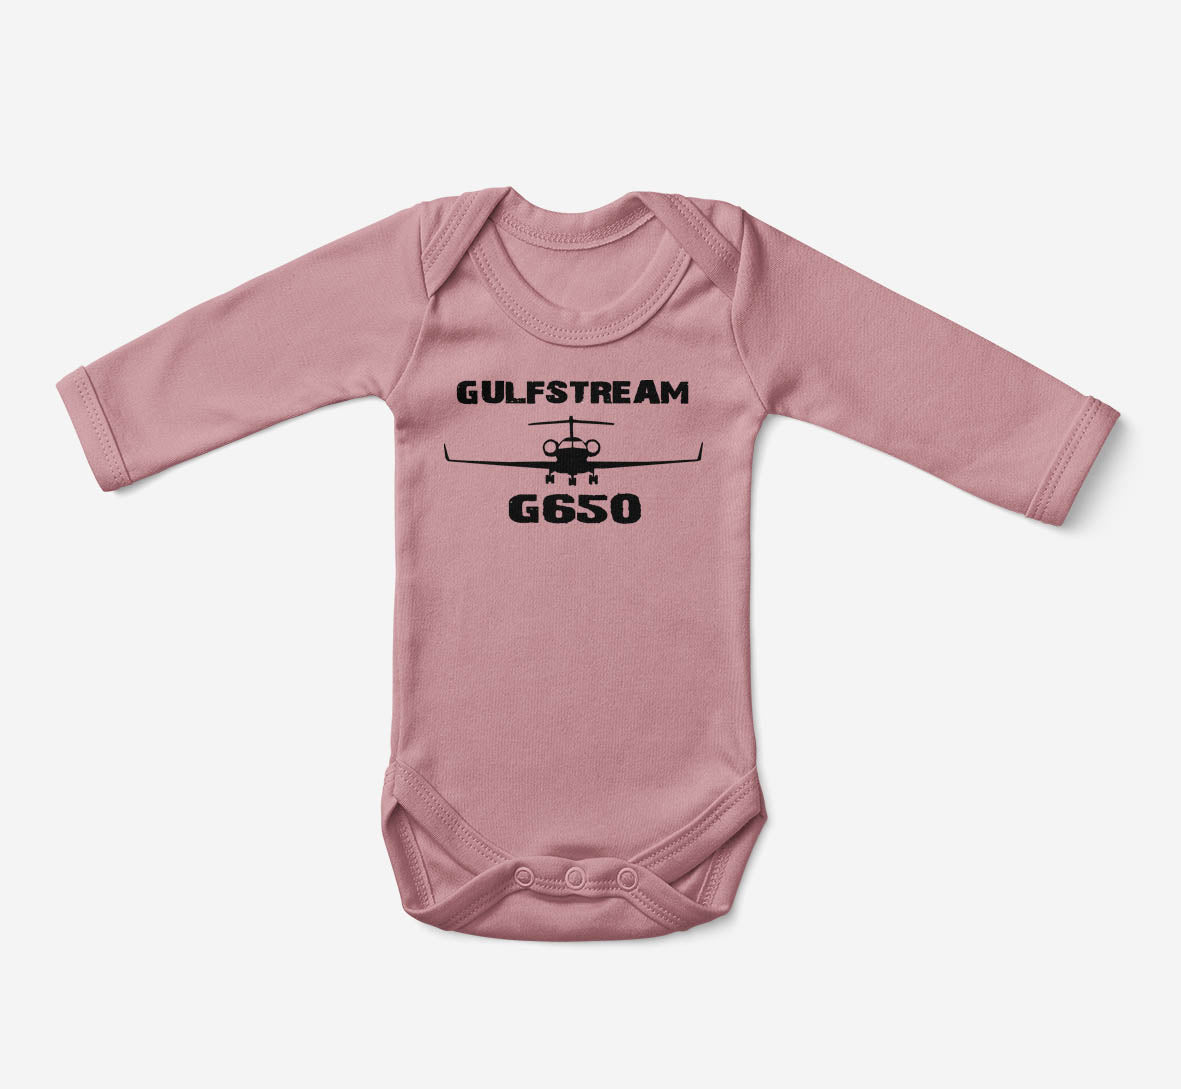 Gulfstream G650 & Plane Designed Baby Bodysuits